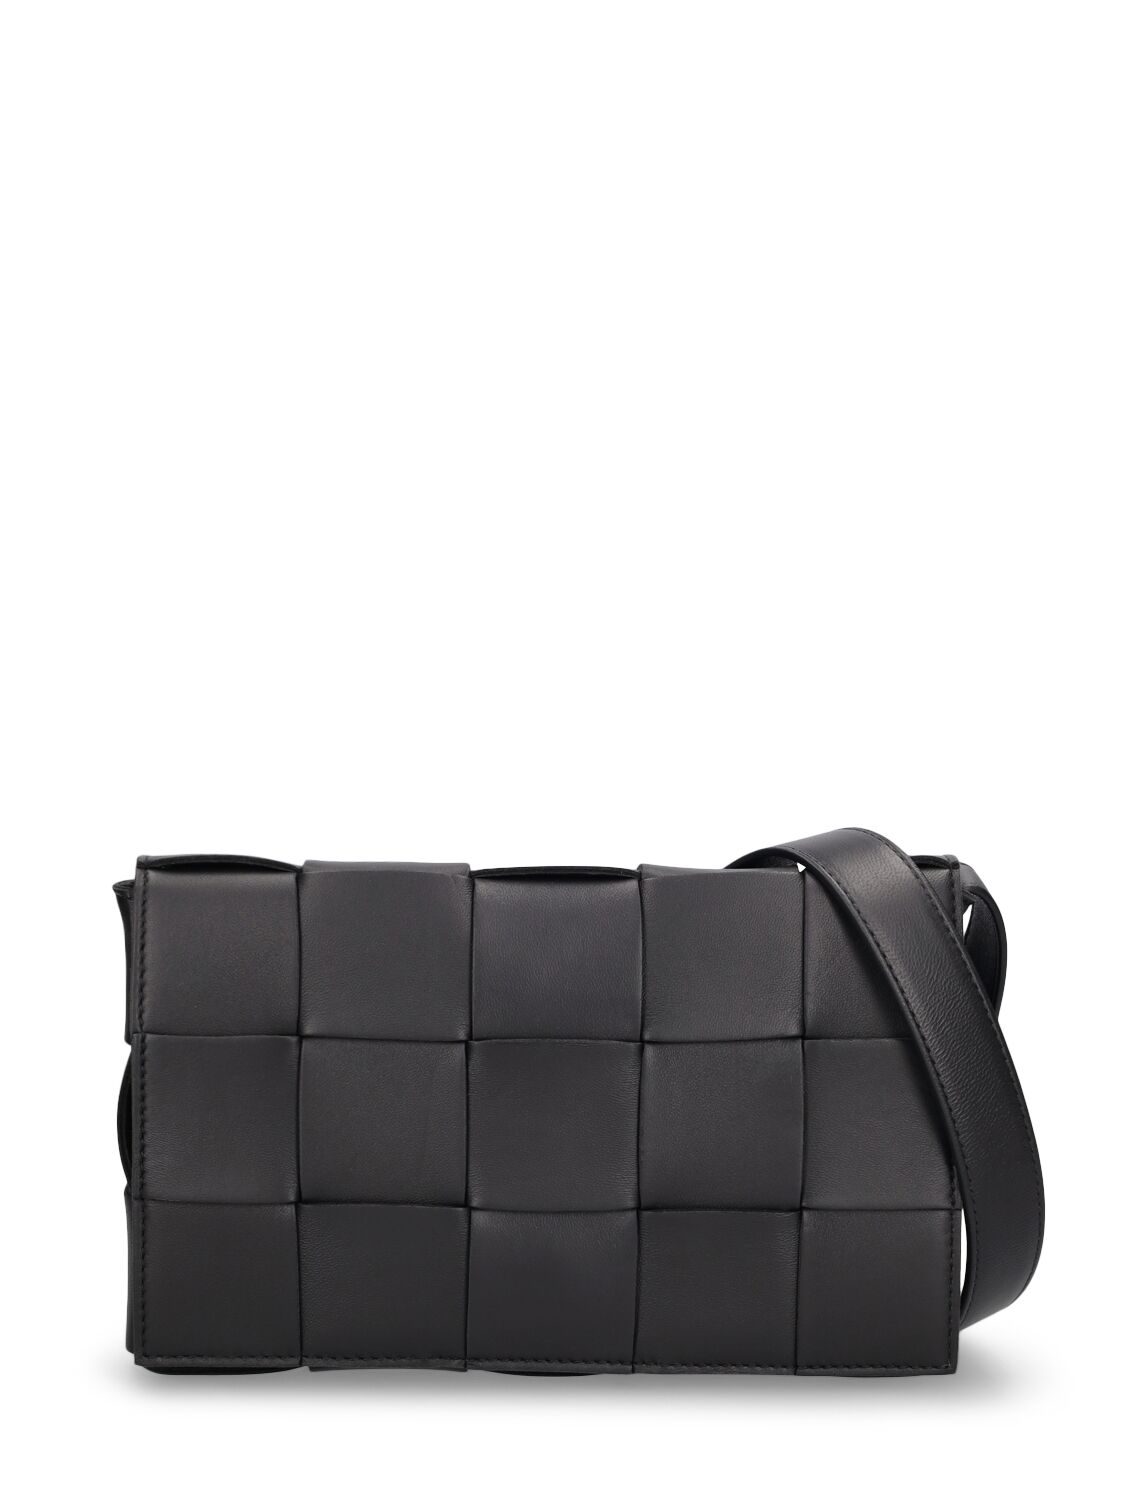 Bottega Veneta Cassette Leather Shoulder Bag In Black